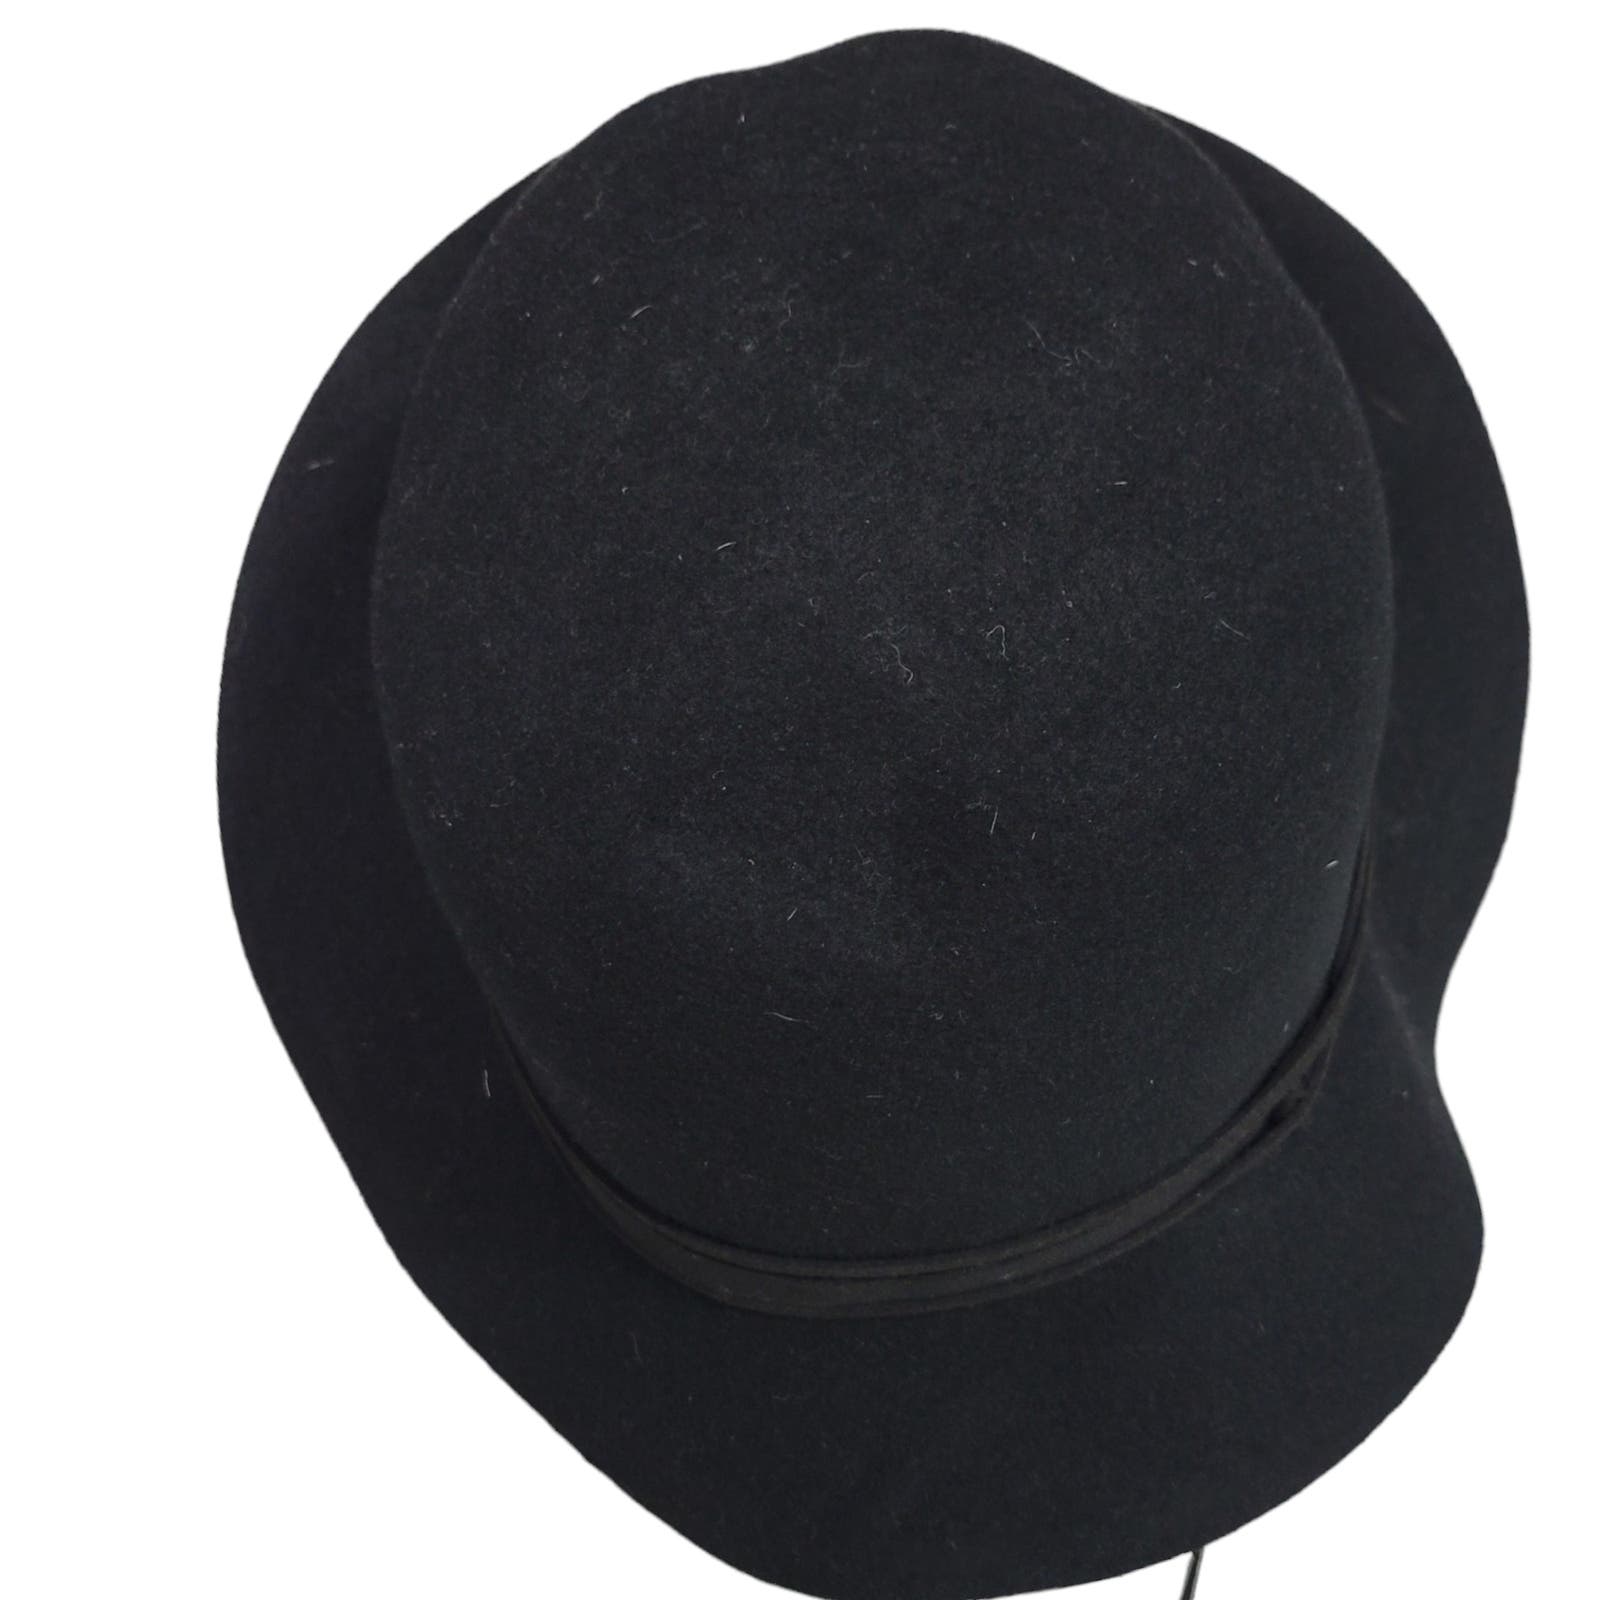 Krono Krown Wool Hat Black Felt Winter Fashion Bowler Cloche Brim Adjustable One Size